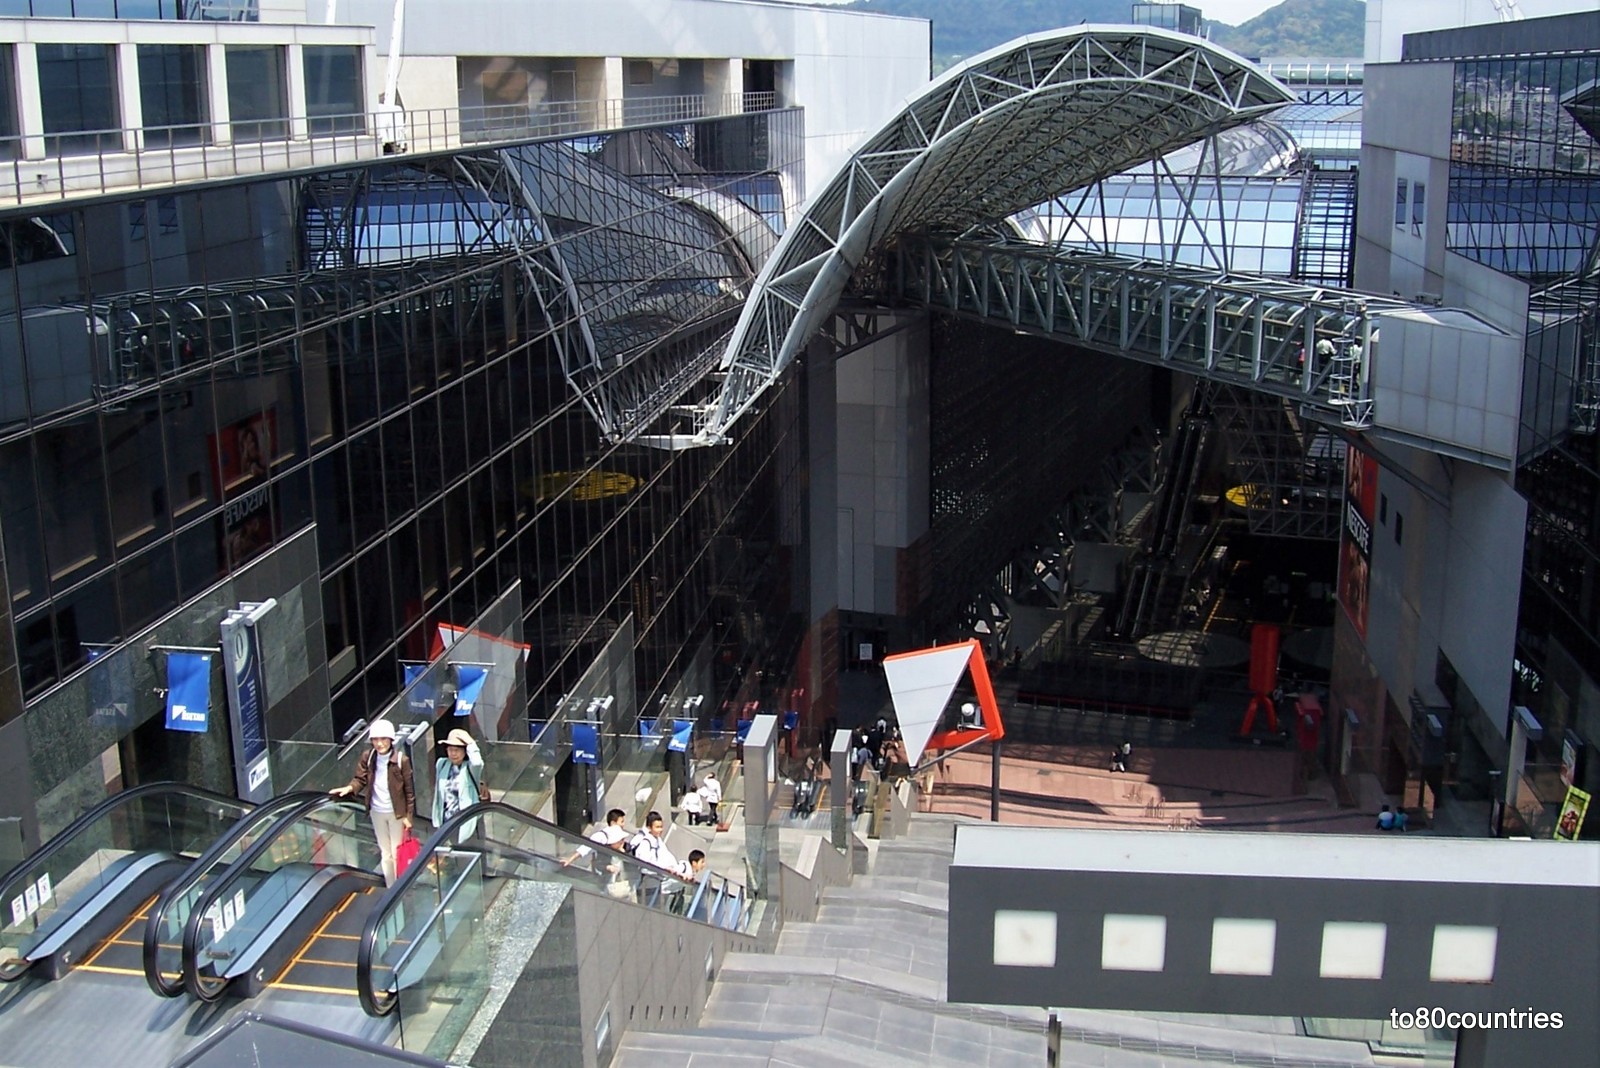 Bahnhof Kyoto